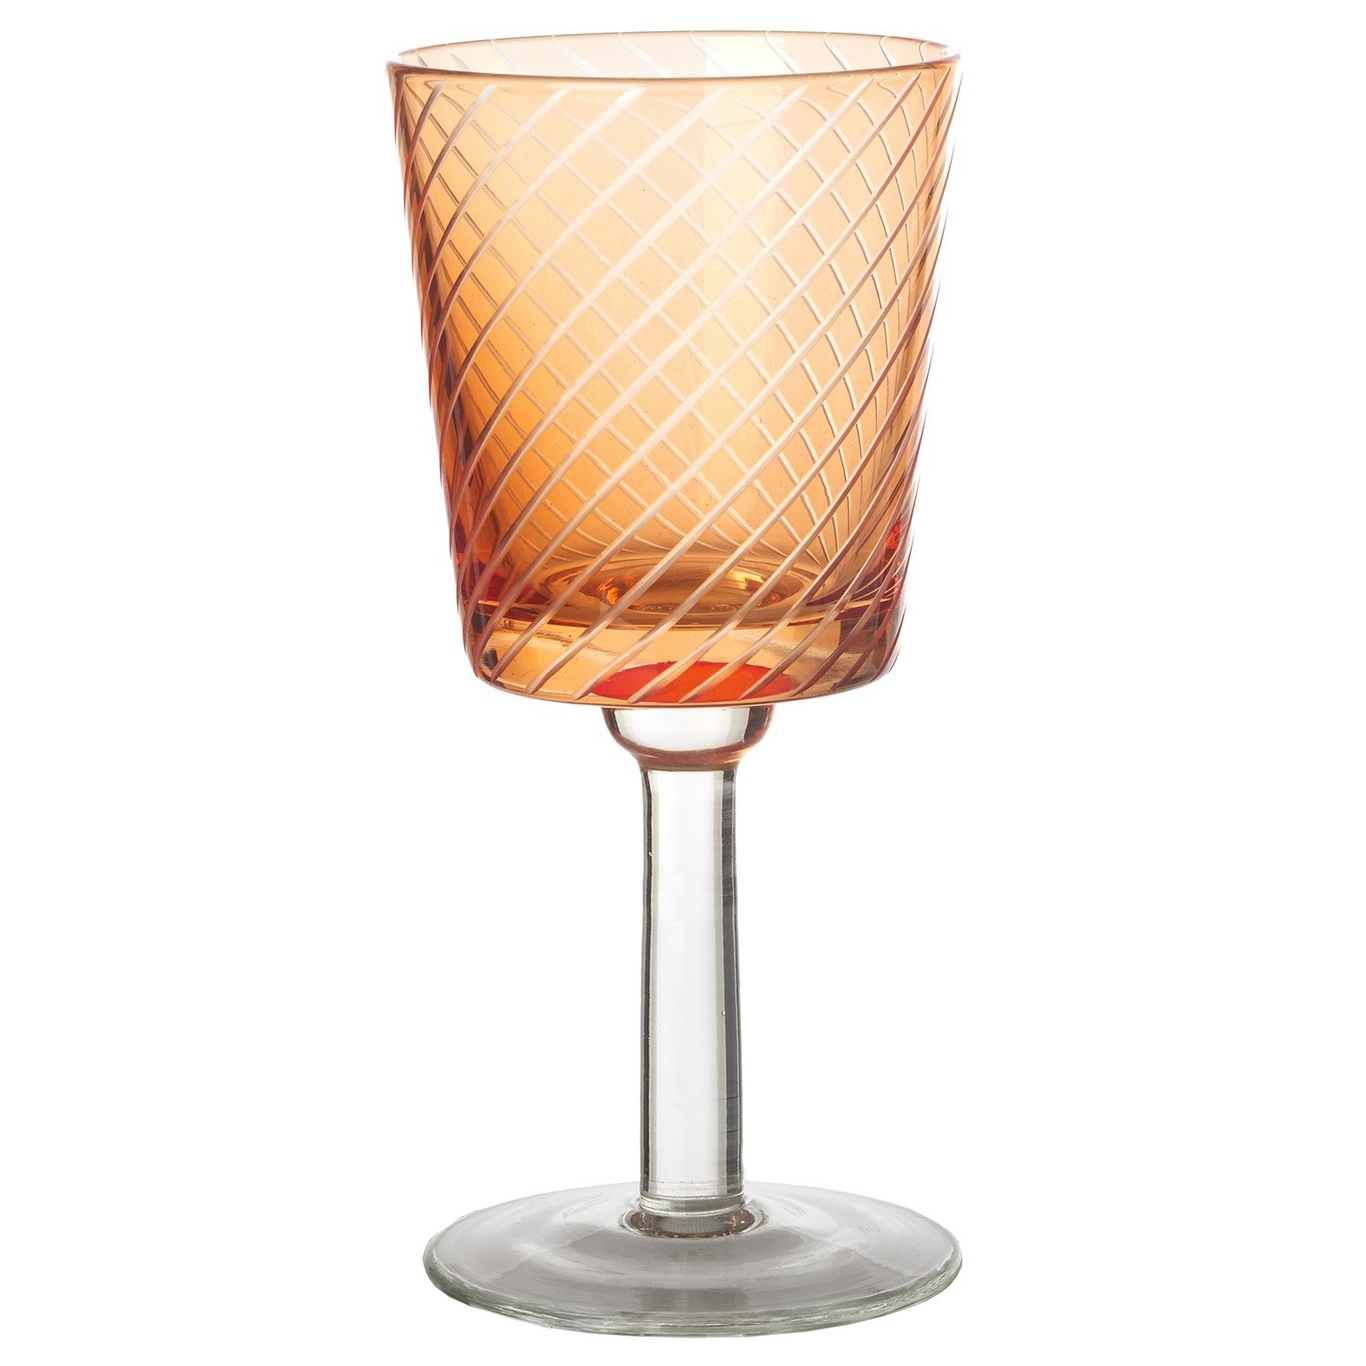 https://royaldesign.com/image/2/pols-potten-wine-glass-library-set-6-1?w=800&quality=80